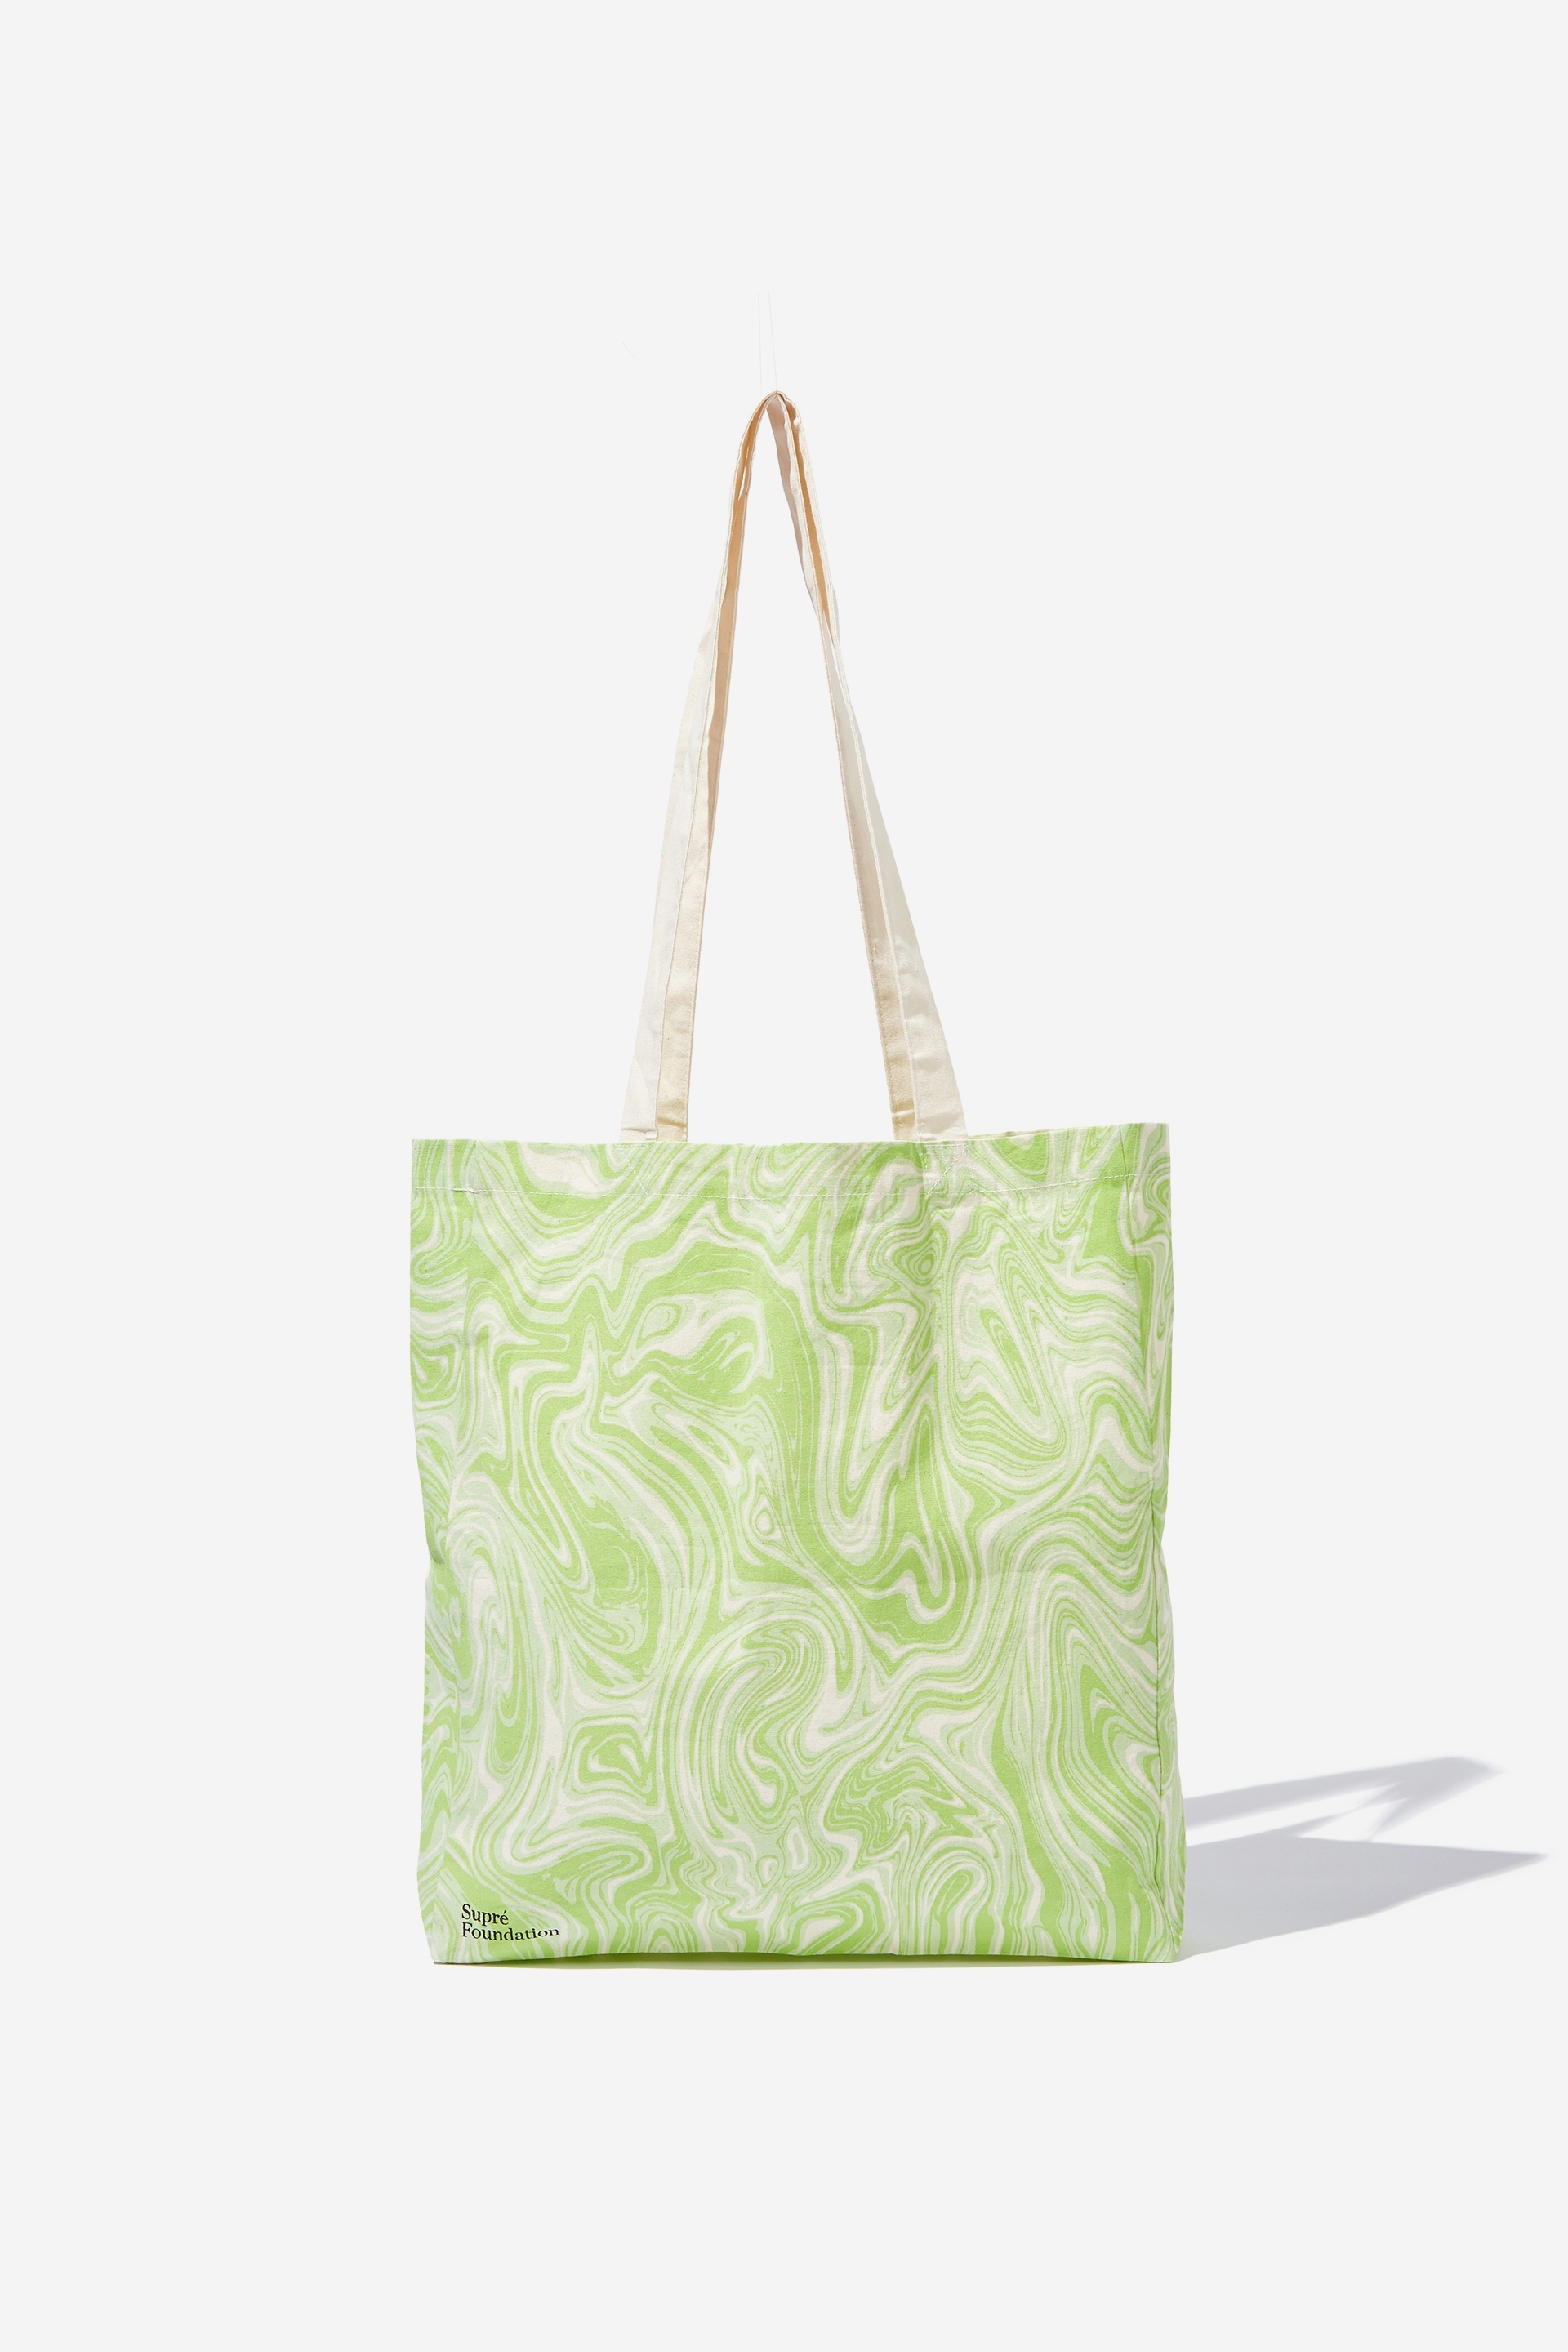 Cotton On Foundation - Foundation Supre Organic Tote Bag - Green swirl